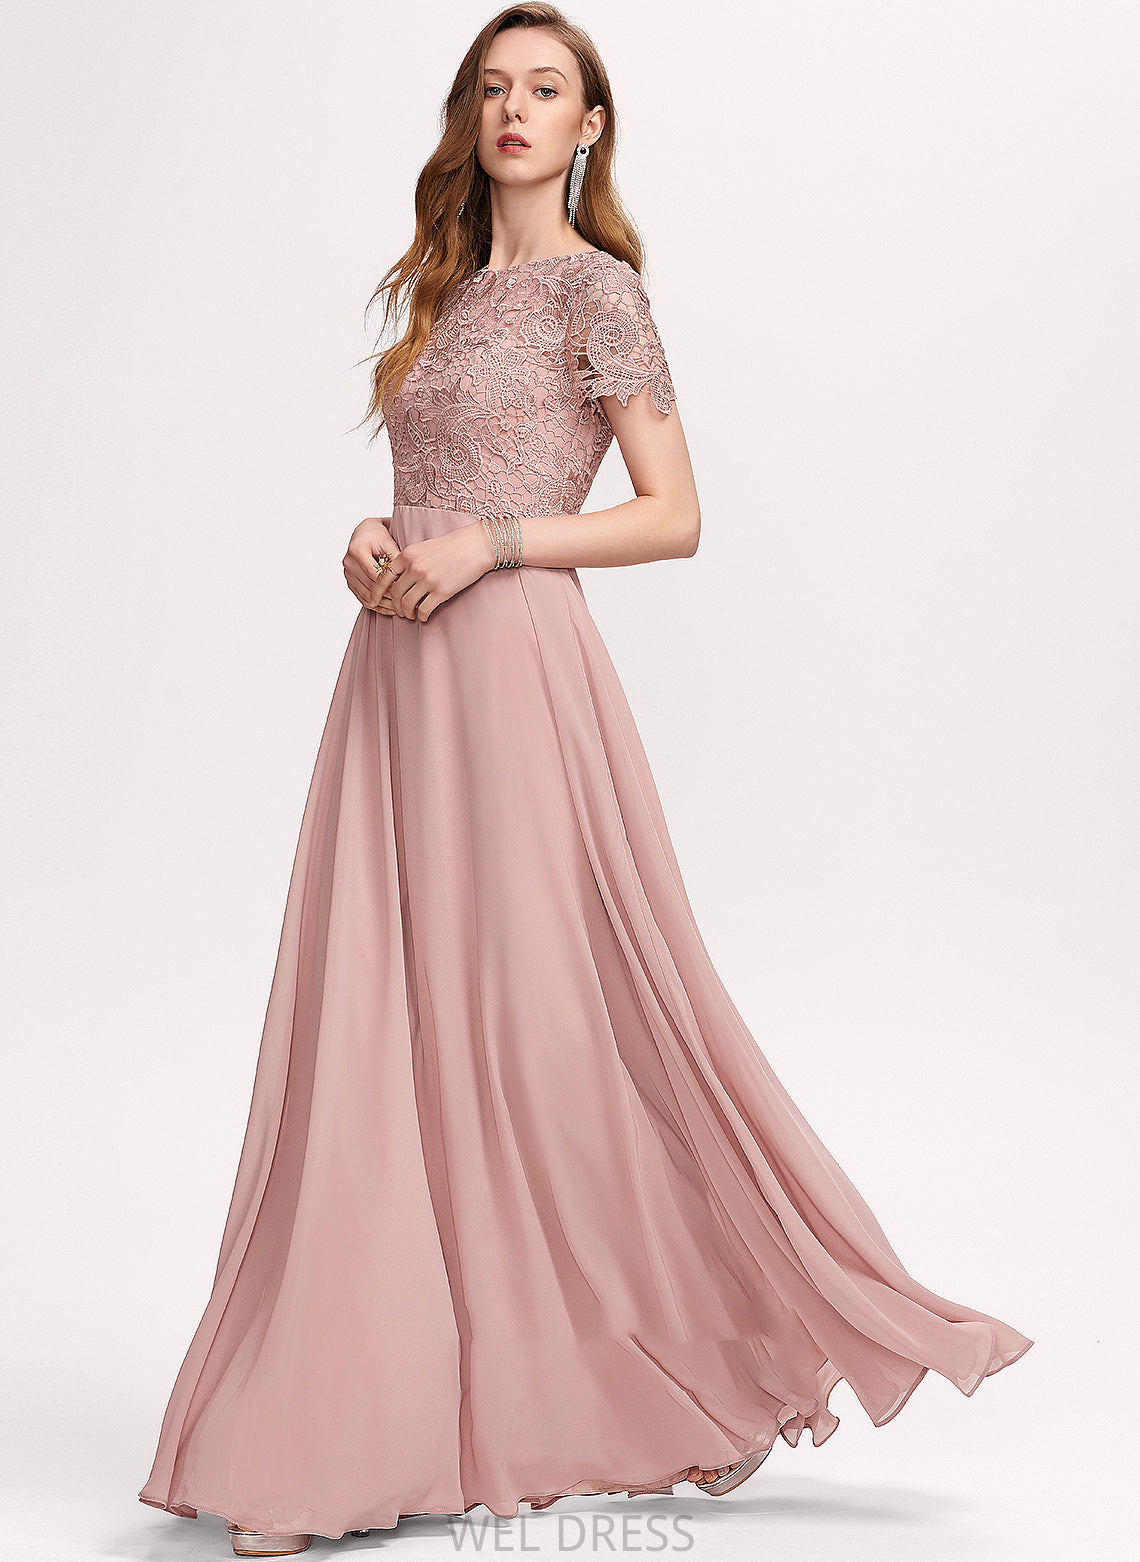 ScoopNeck Silhouette A-Line Fabric Neckline Length Embellishment Sequins Floor-Length Jenna Short Sleeves A-Line/Princess